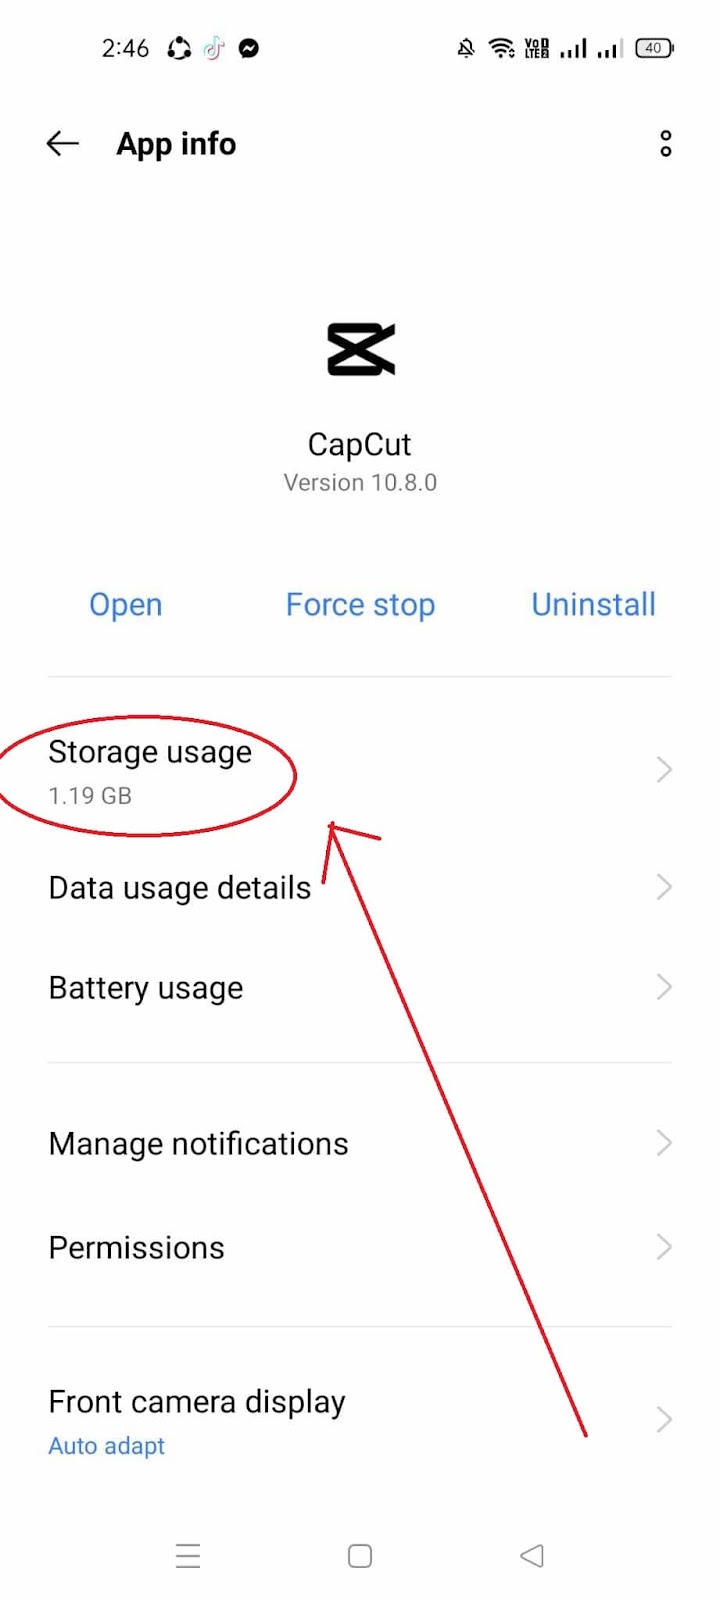 CapCut Audio Delay How to Fix - Click Storage Usage